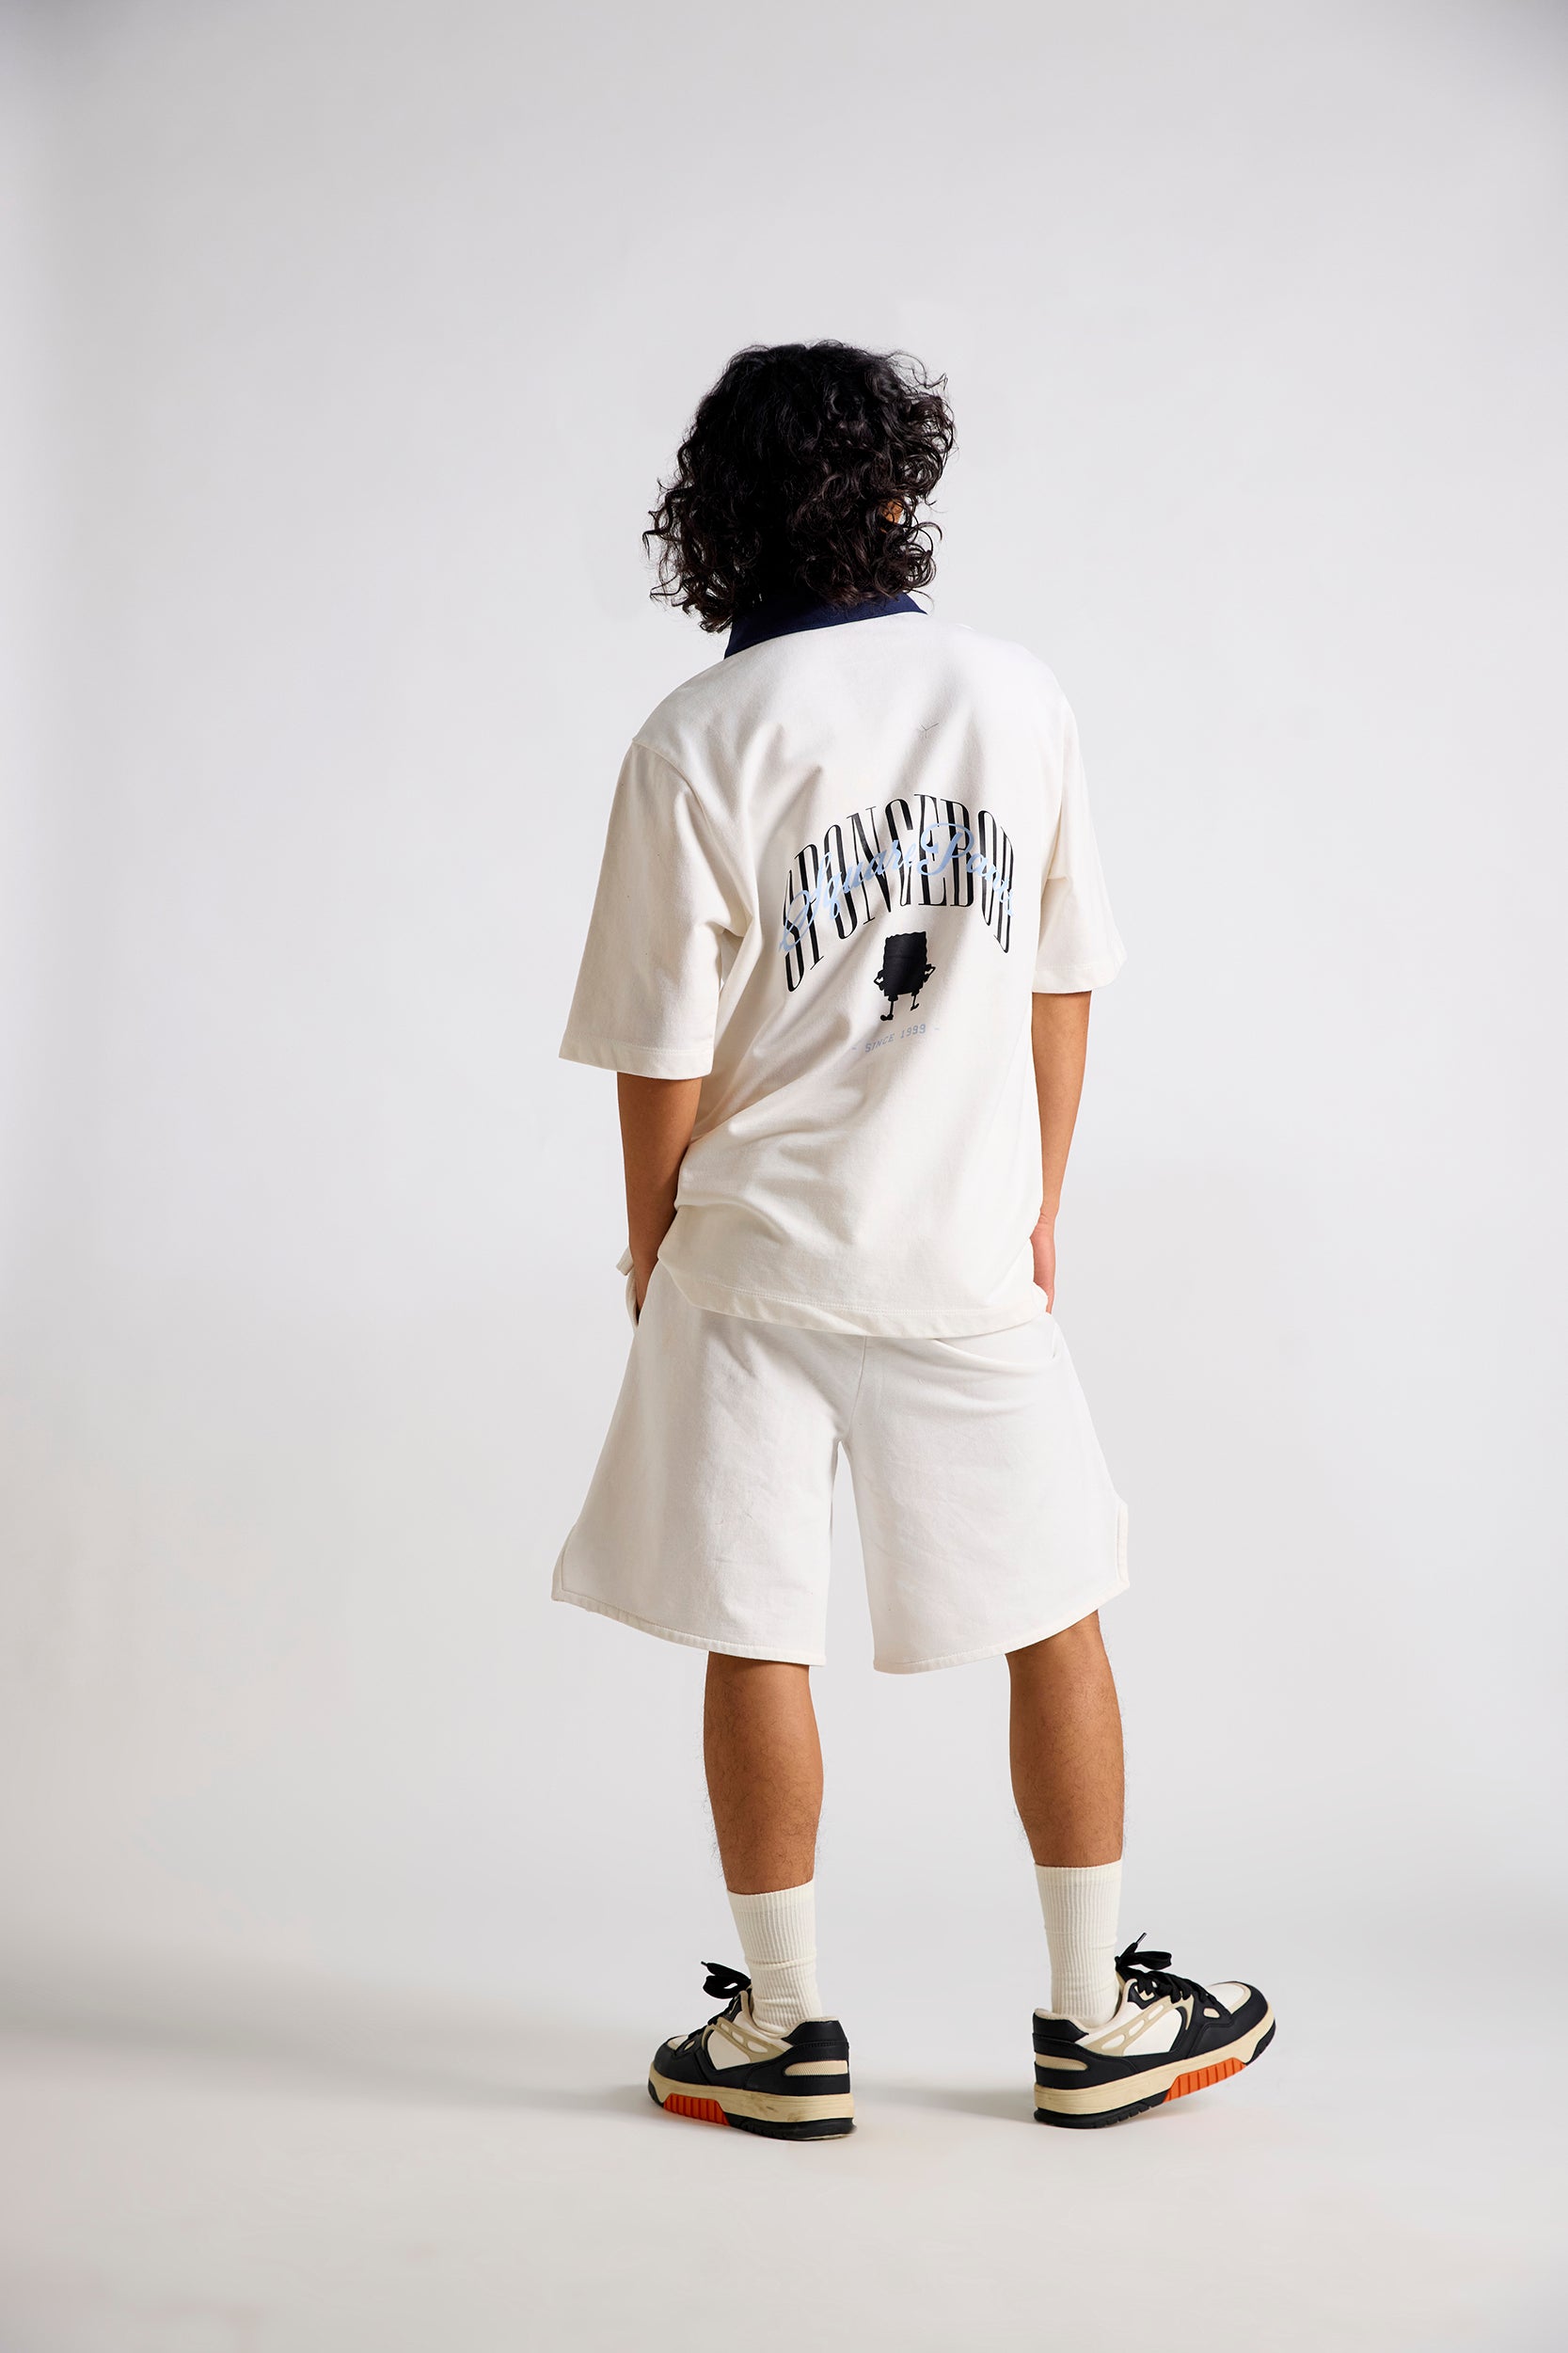 Spongebob:Typographic Printed Men's Polo T-shirt and Shorts Set